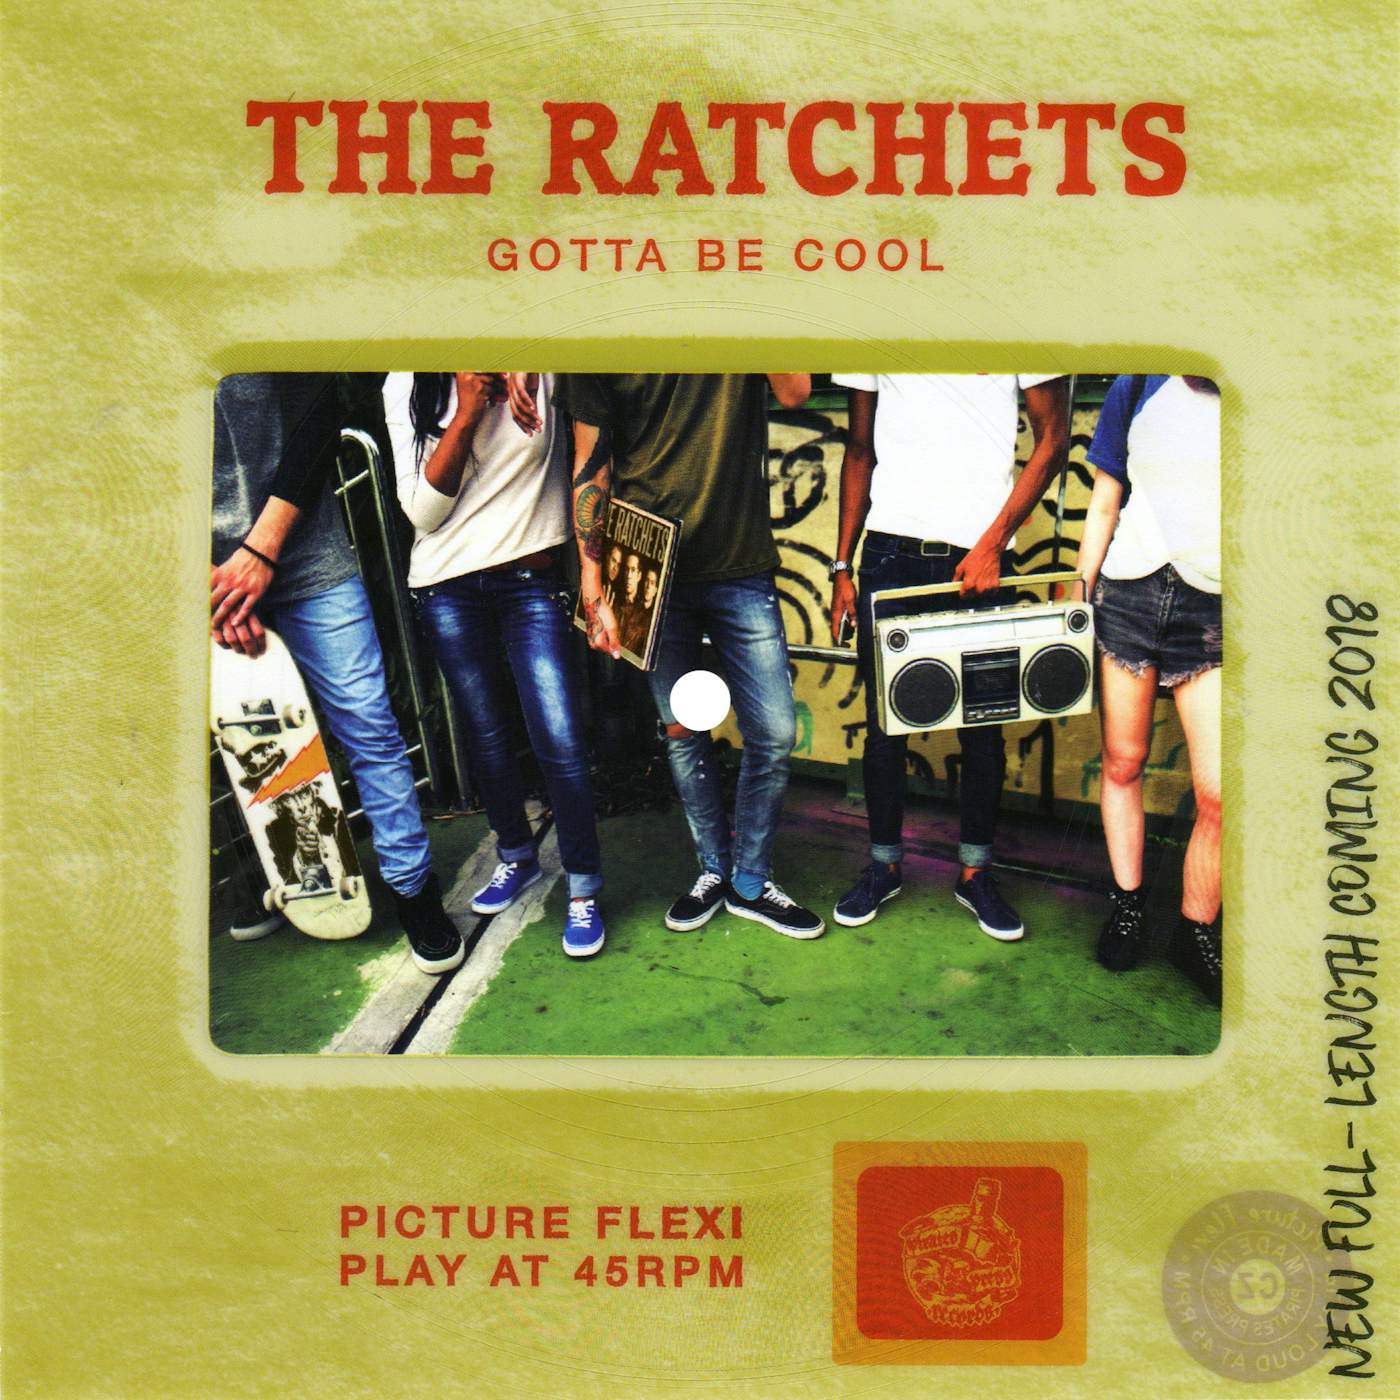 The Ratchets - Gotta Be Cool Slide Flexi